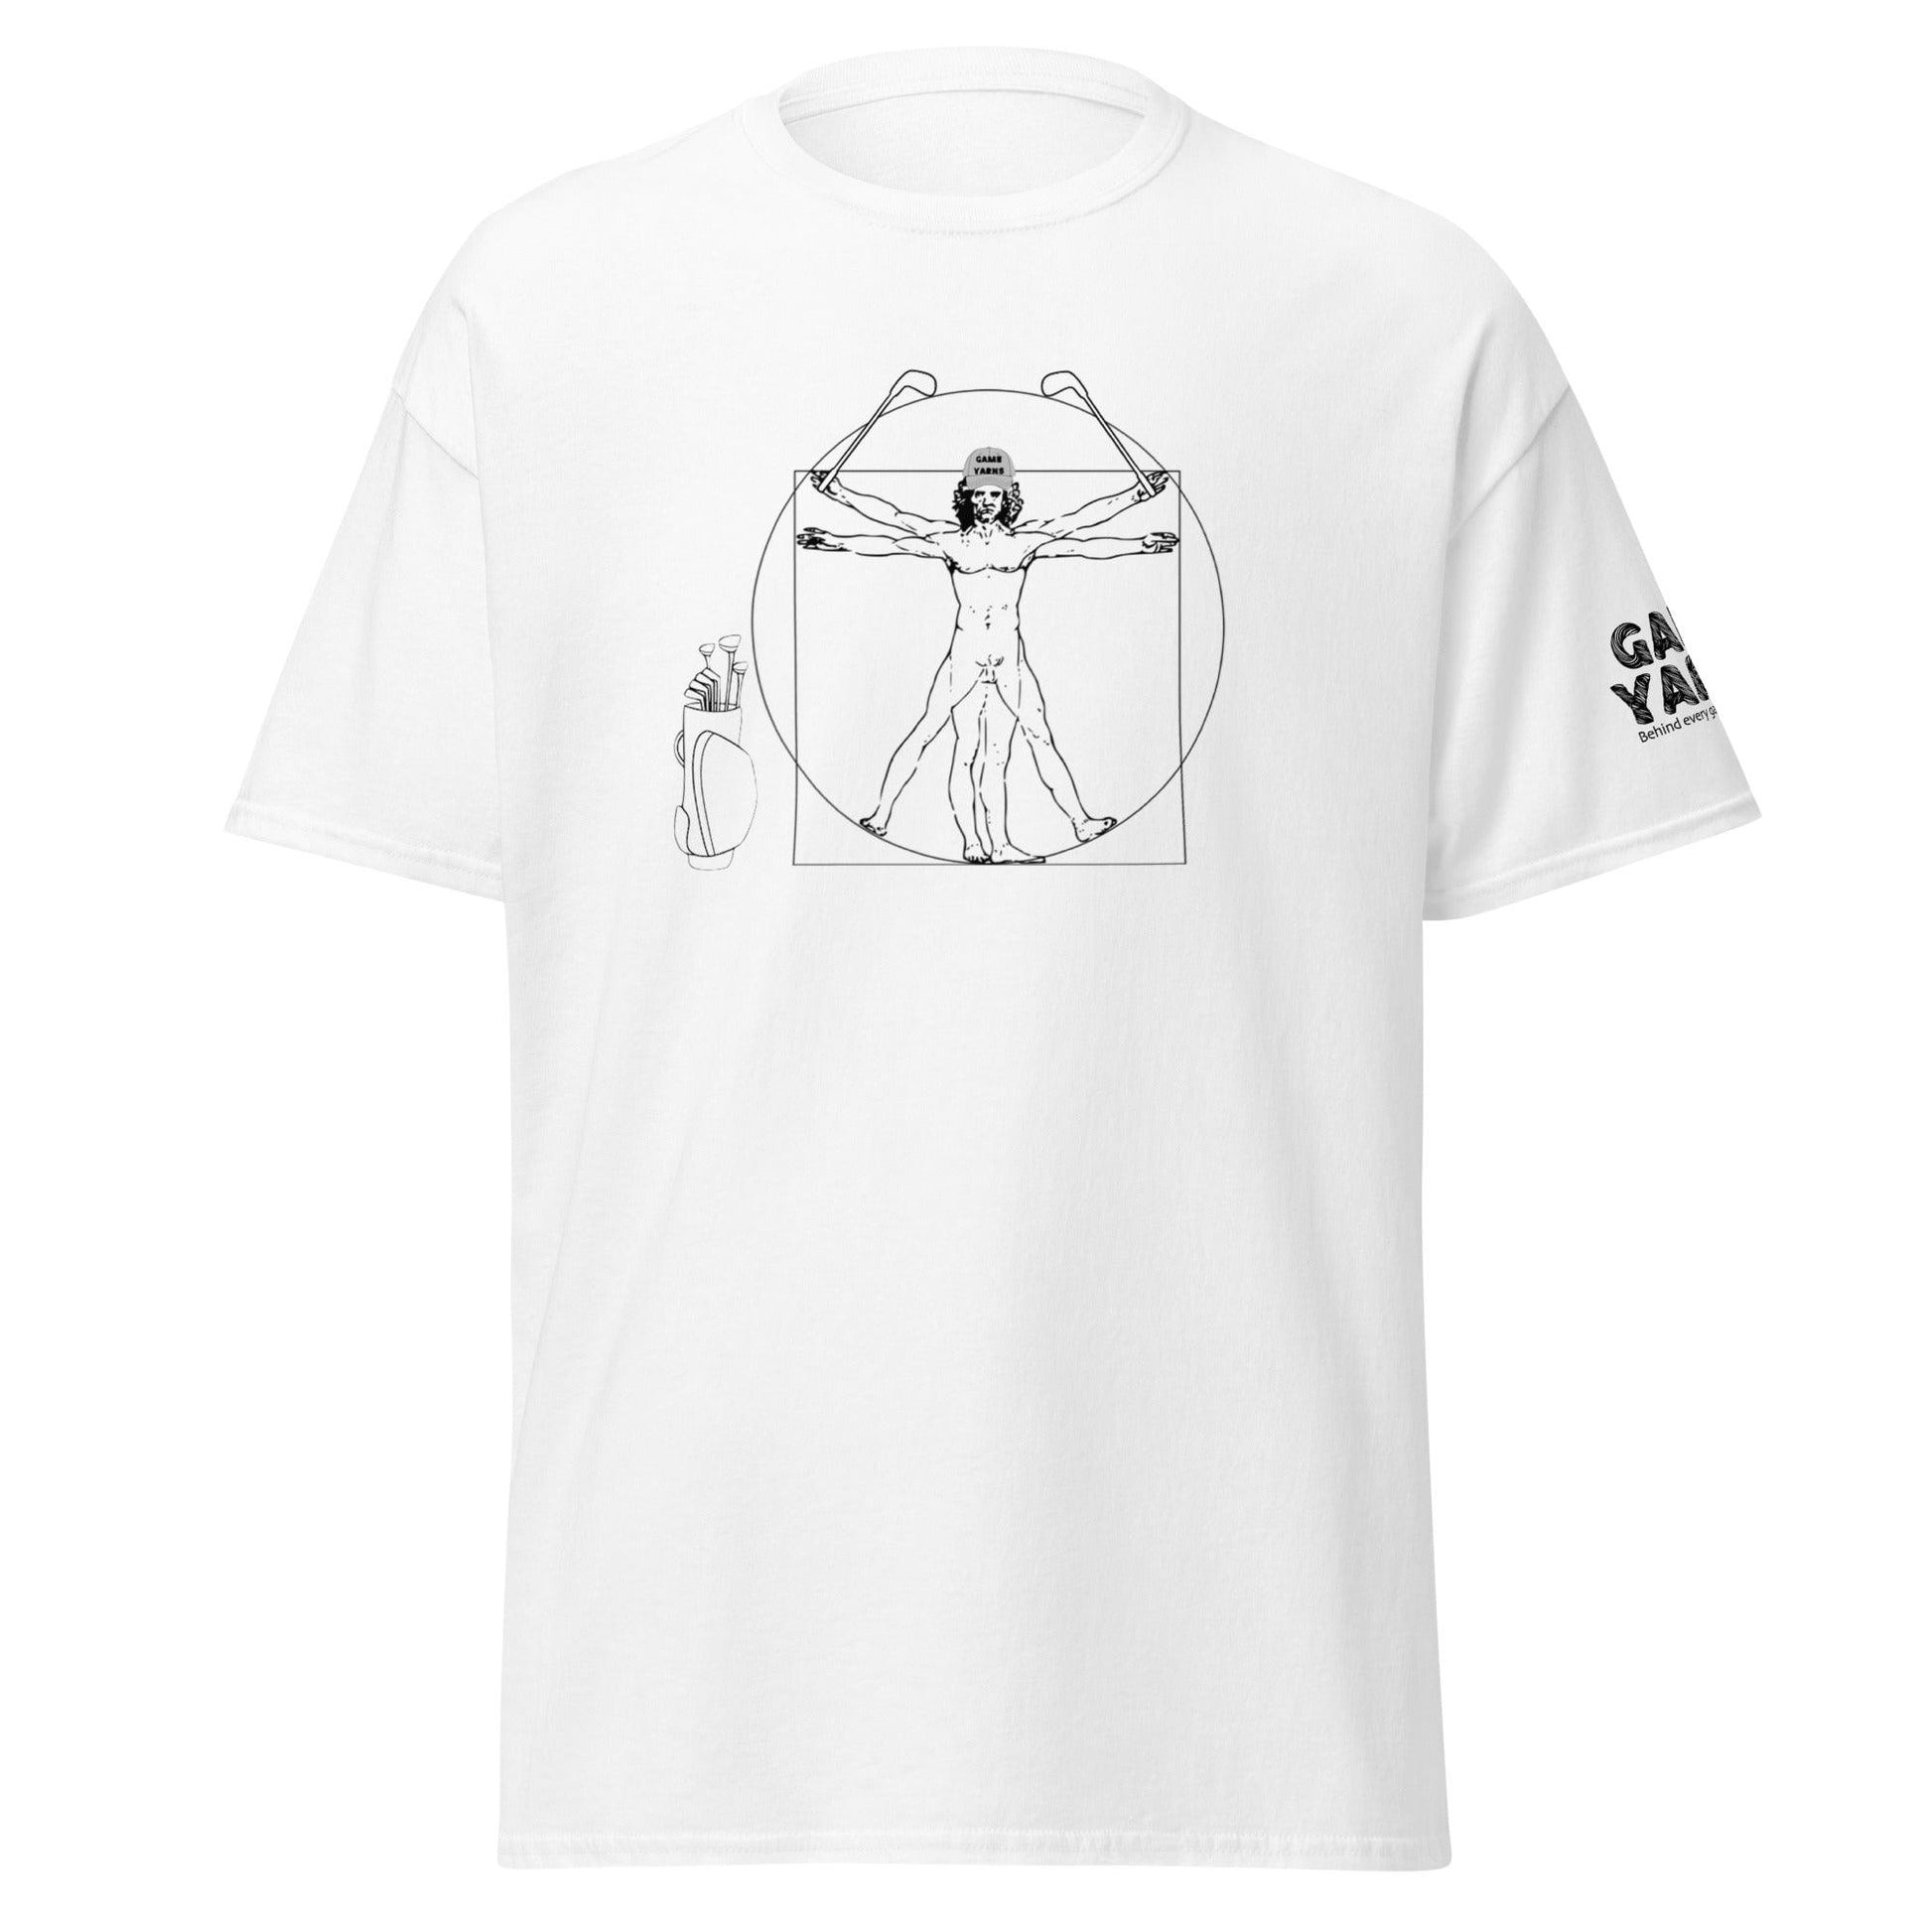 Vitruvian Golfer t-shirt by Game Yarns